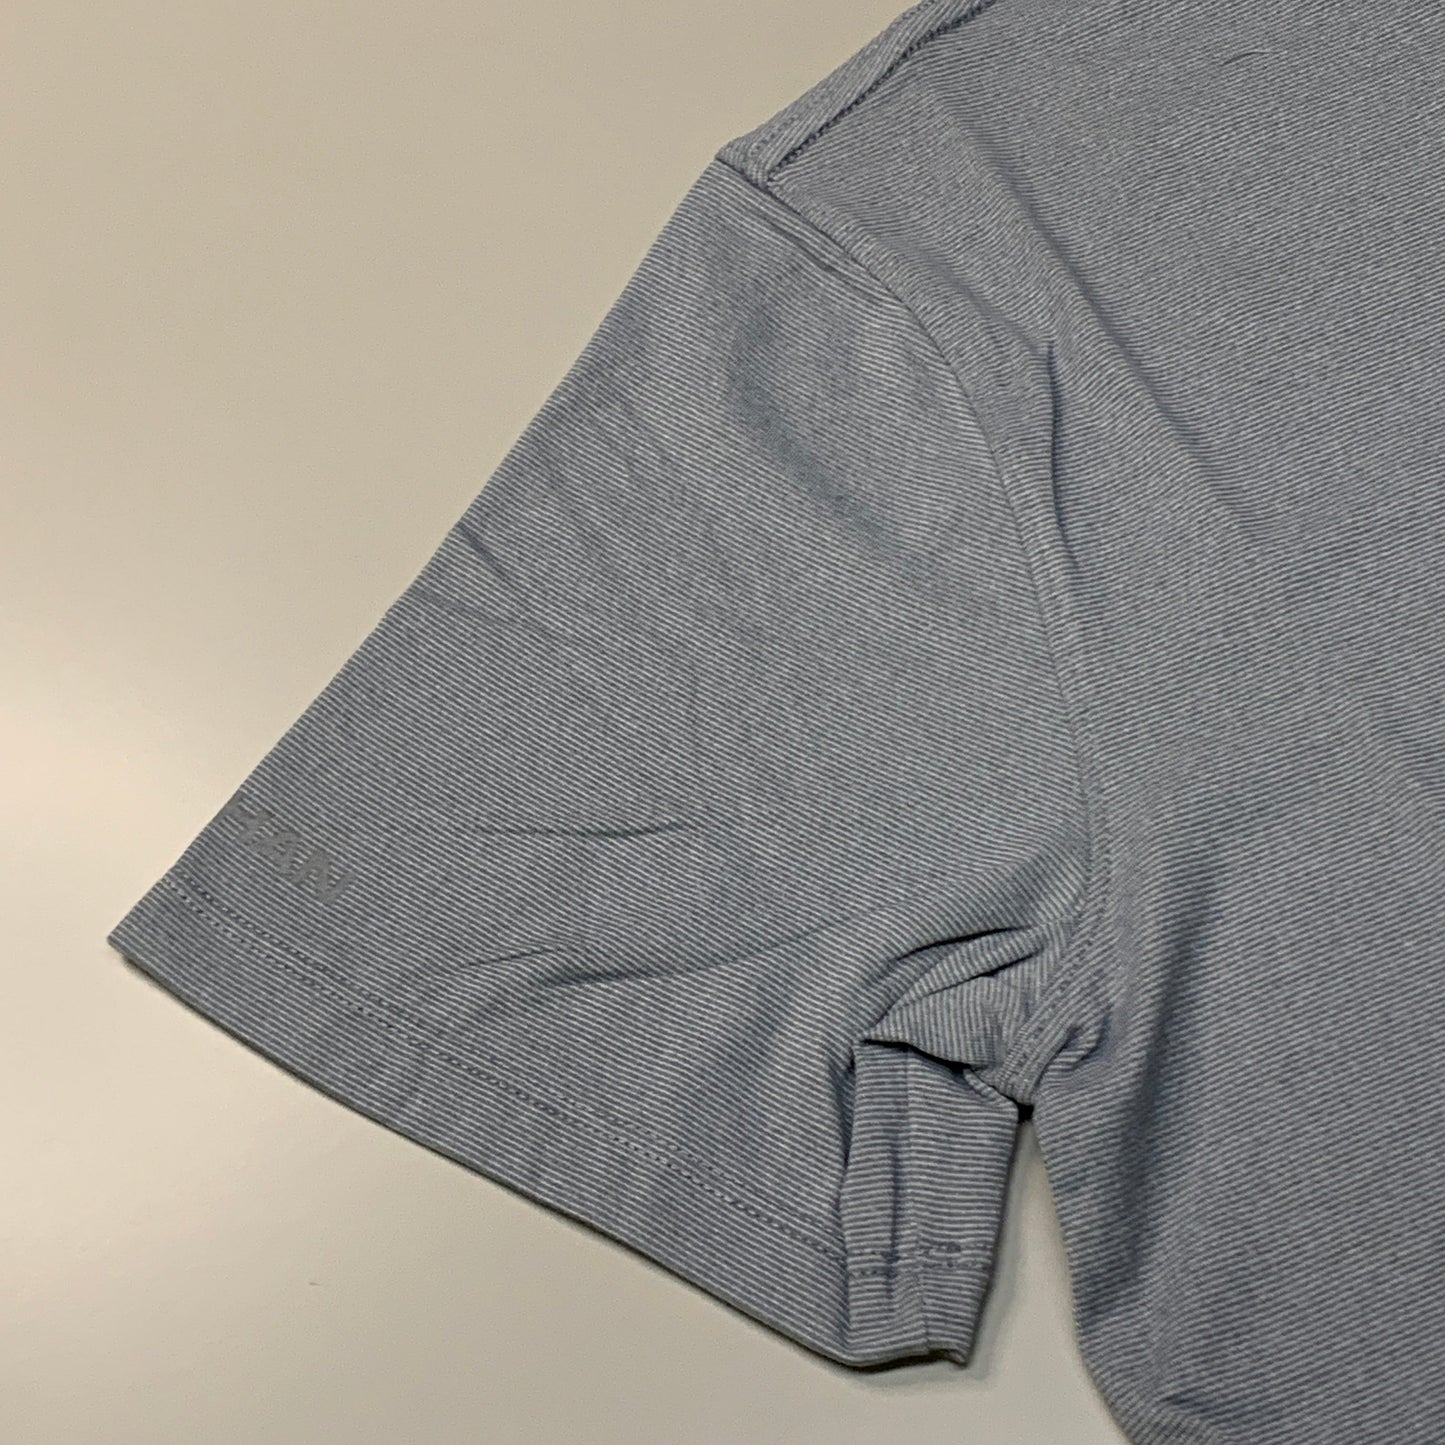 NATHAN Dash Tee Short Sleeve Shirt Monument Grey Stripe SZ L NS50920-80130-L